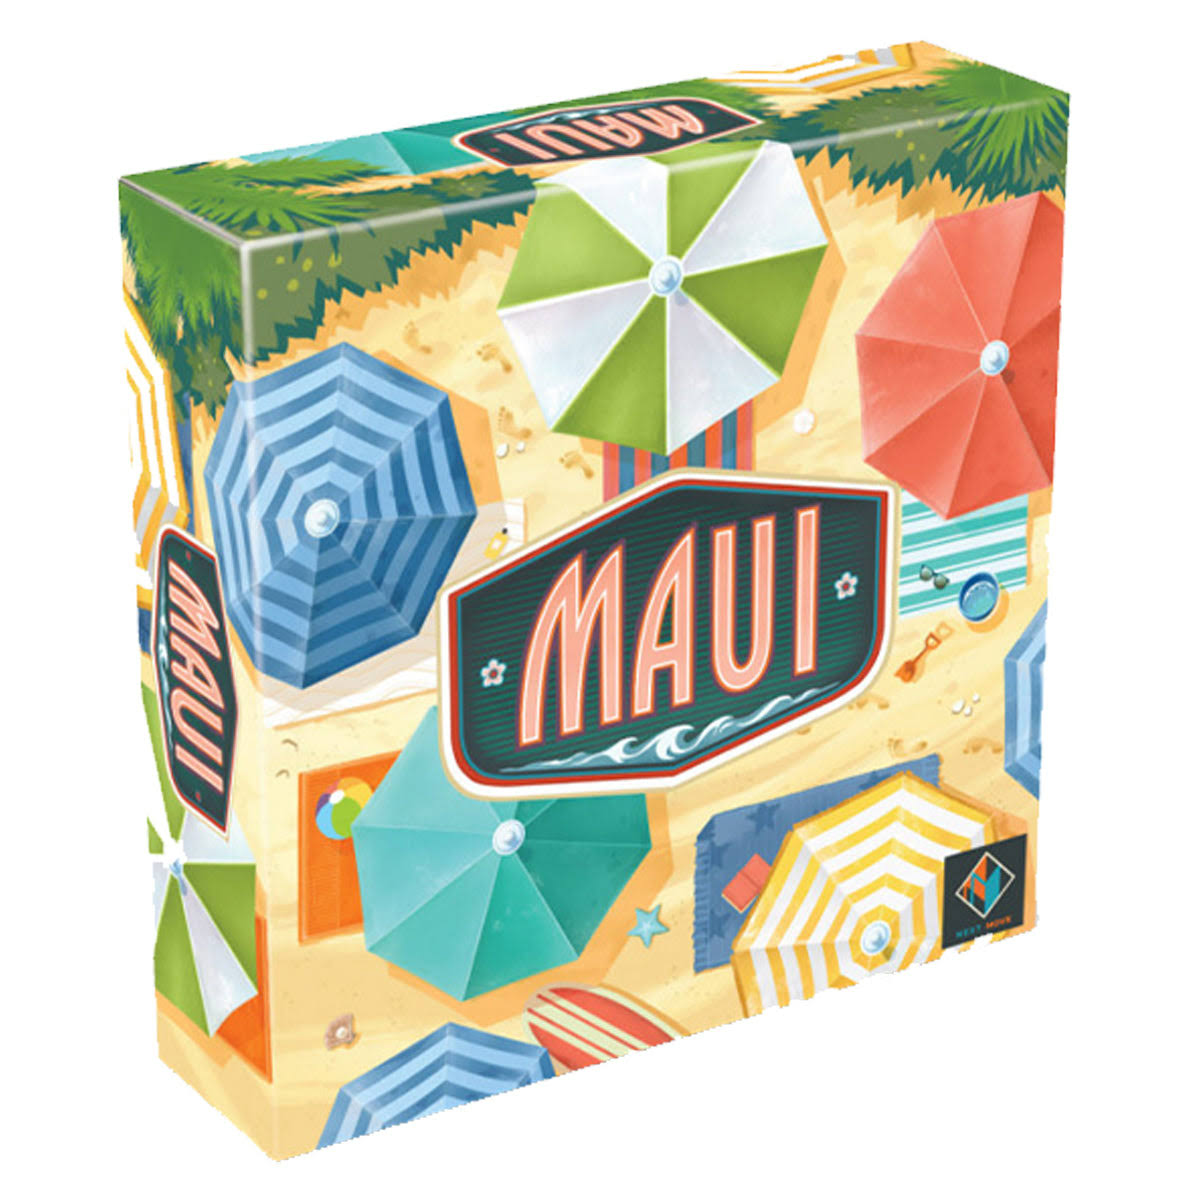 Next Move Games Maui